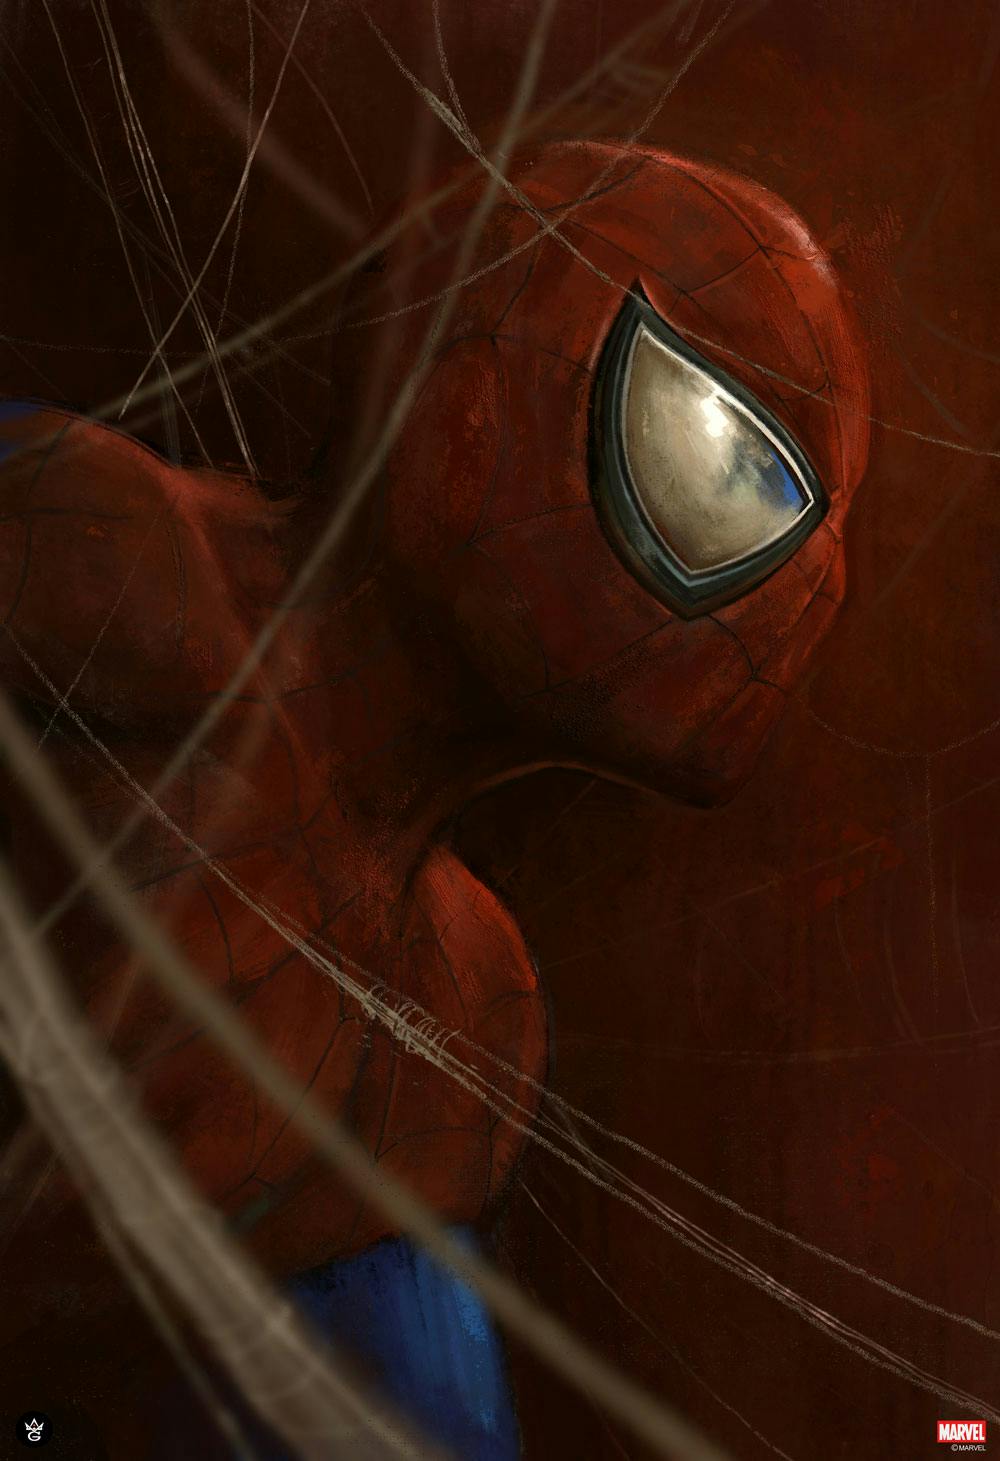 Original "Spiderman" artwork created by Celebrity Fan Fest guest artist Robert Bruno